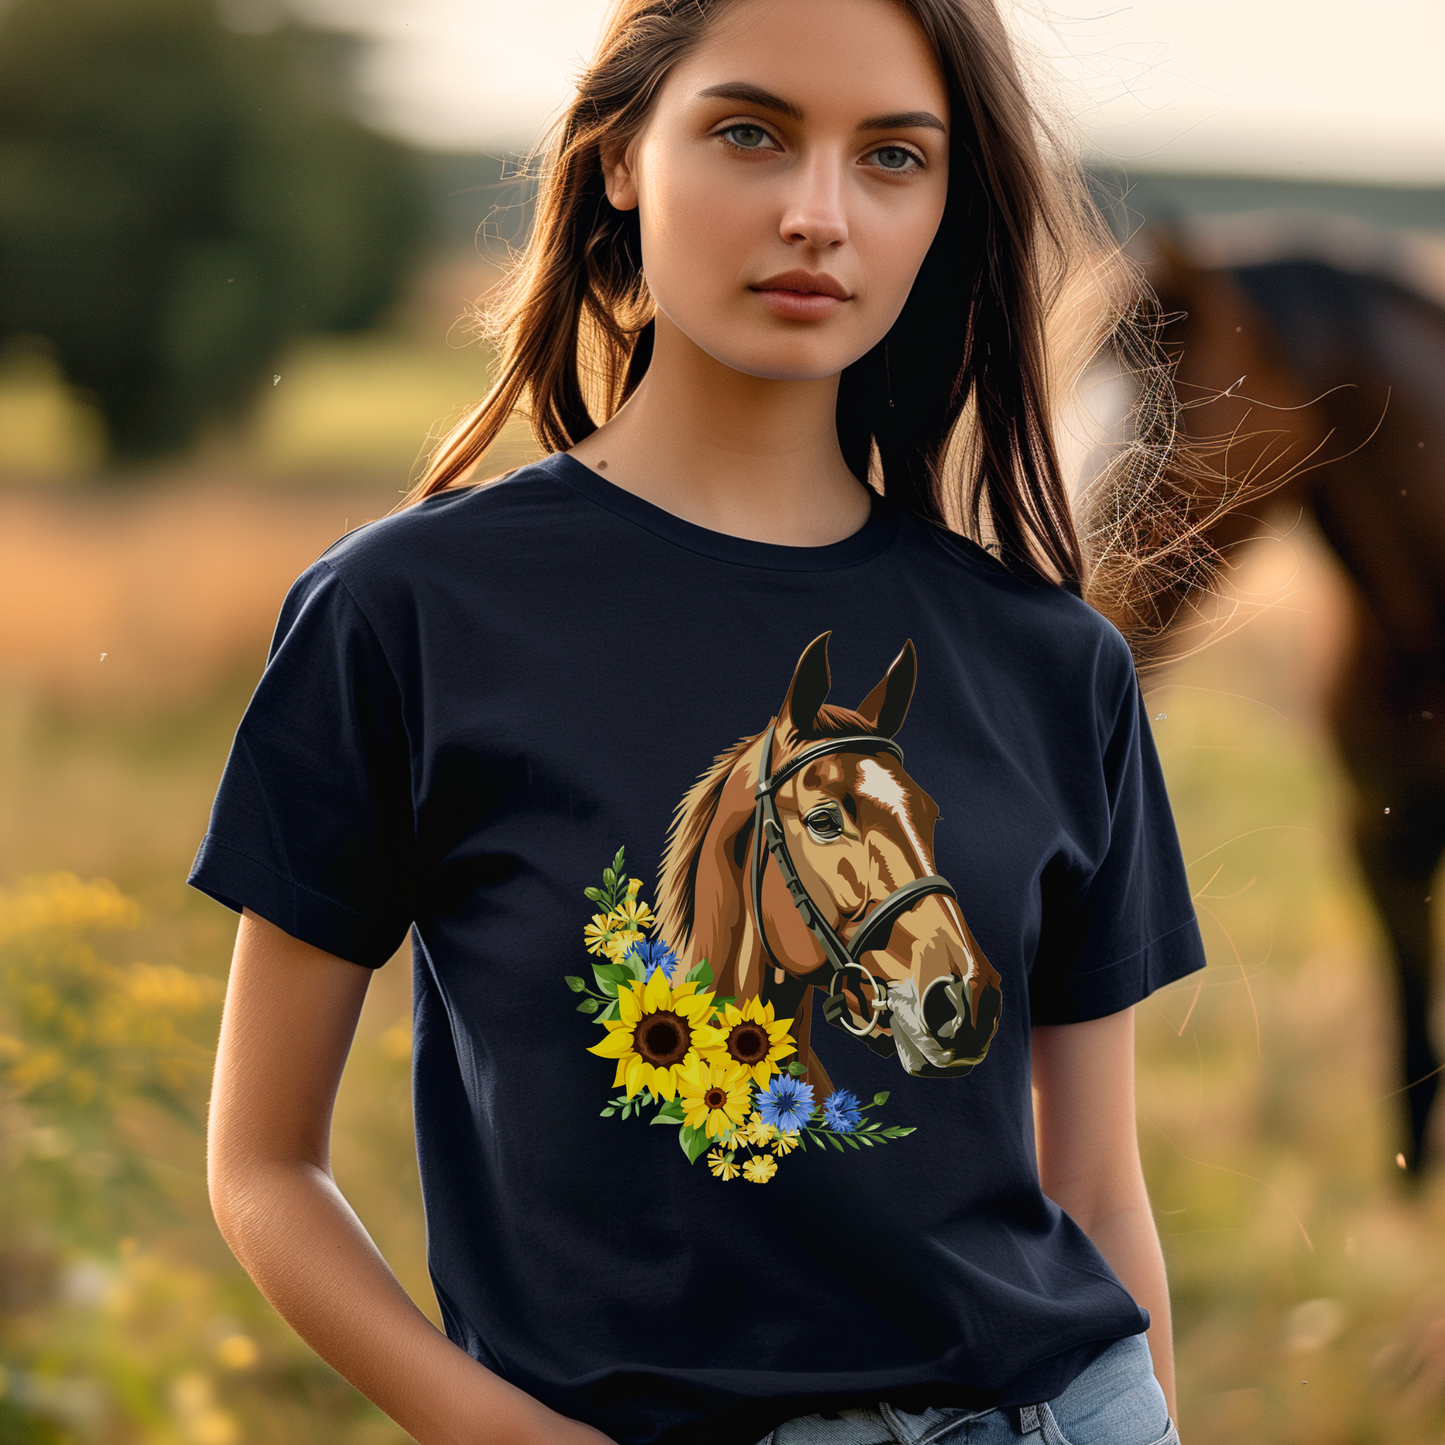 Horse & Sunflowers - Women's Organic Cotton T-Shirt